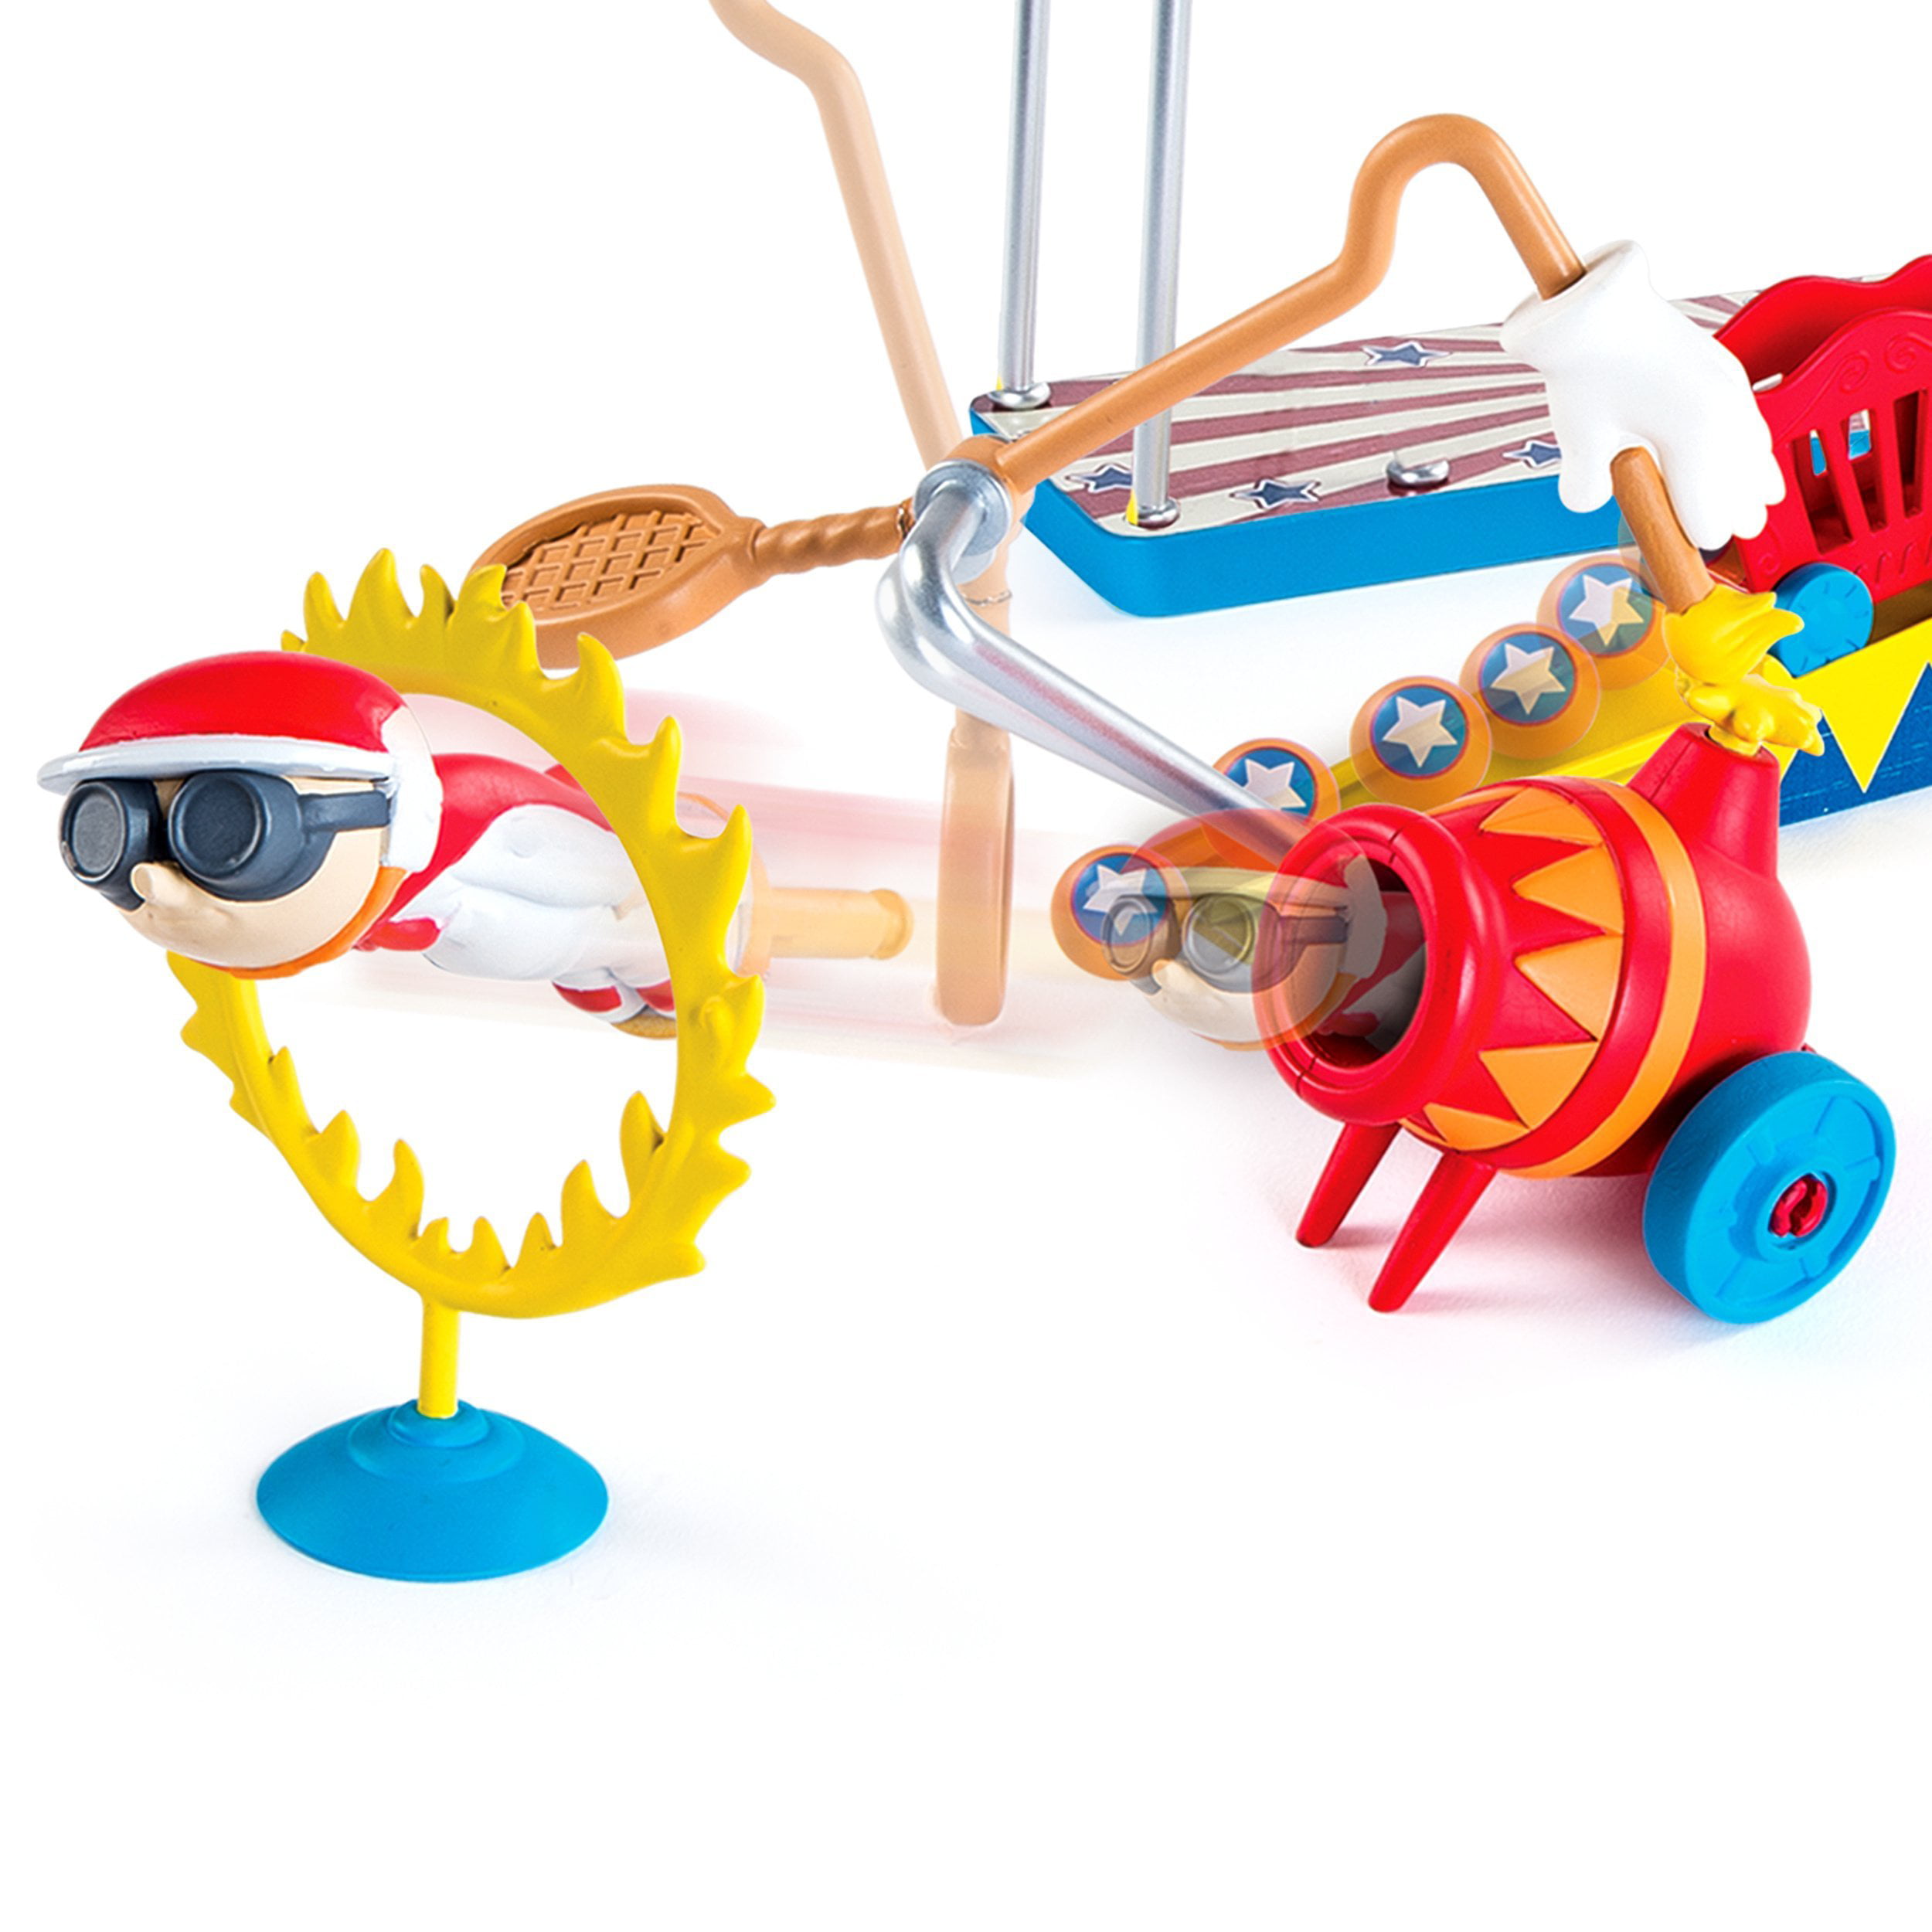 The Acrobat Challenge Rube Goldberg Chain Reaction STEM Toy by Wonderology NIB 